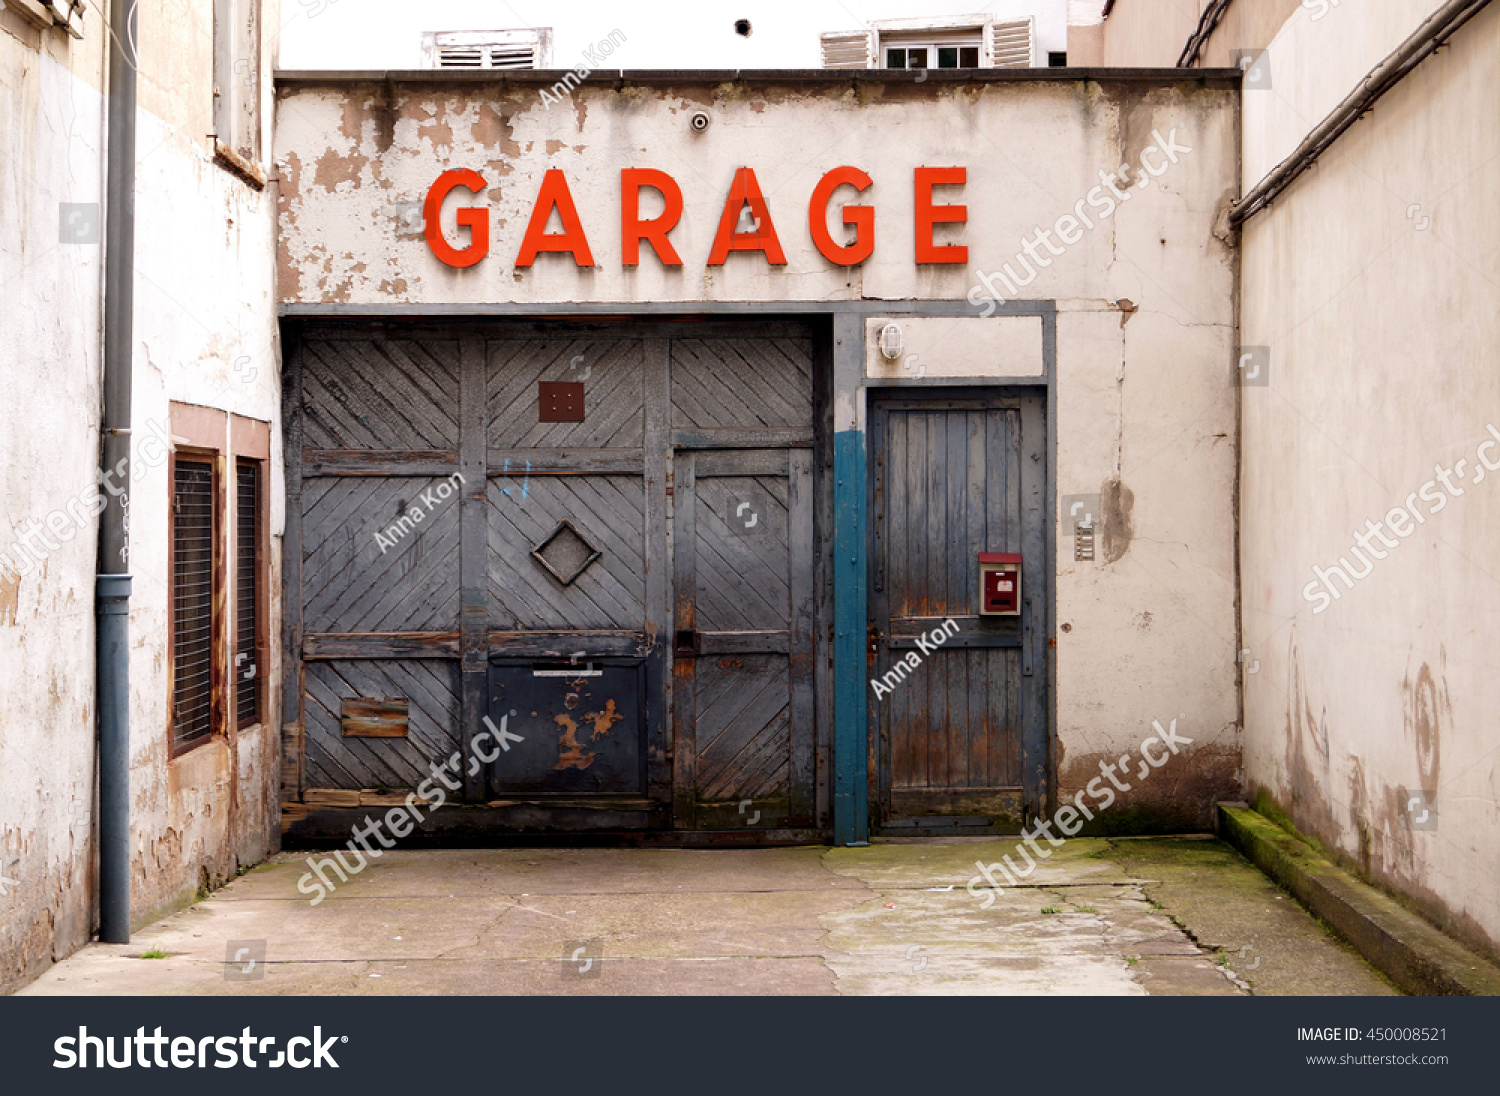 Old Garage Stock Photo 450008521 | Shutterstock